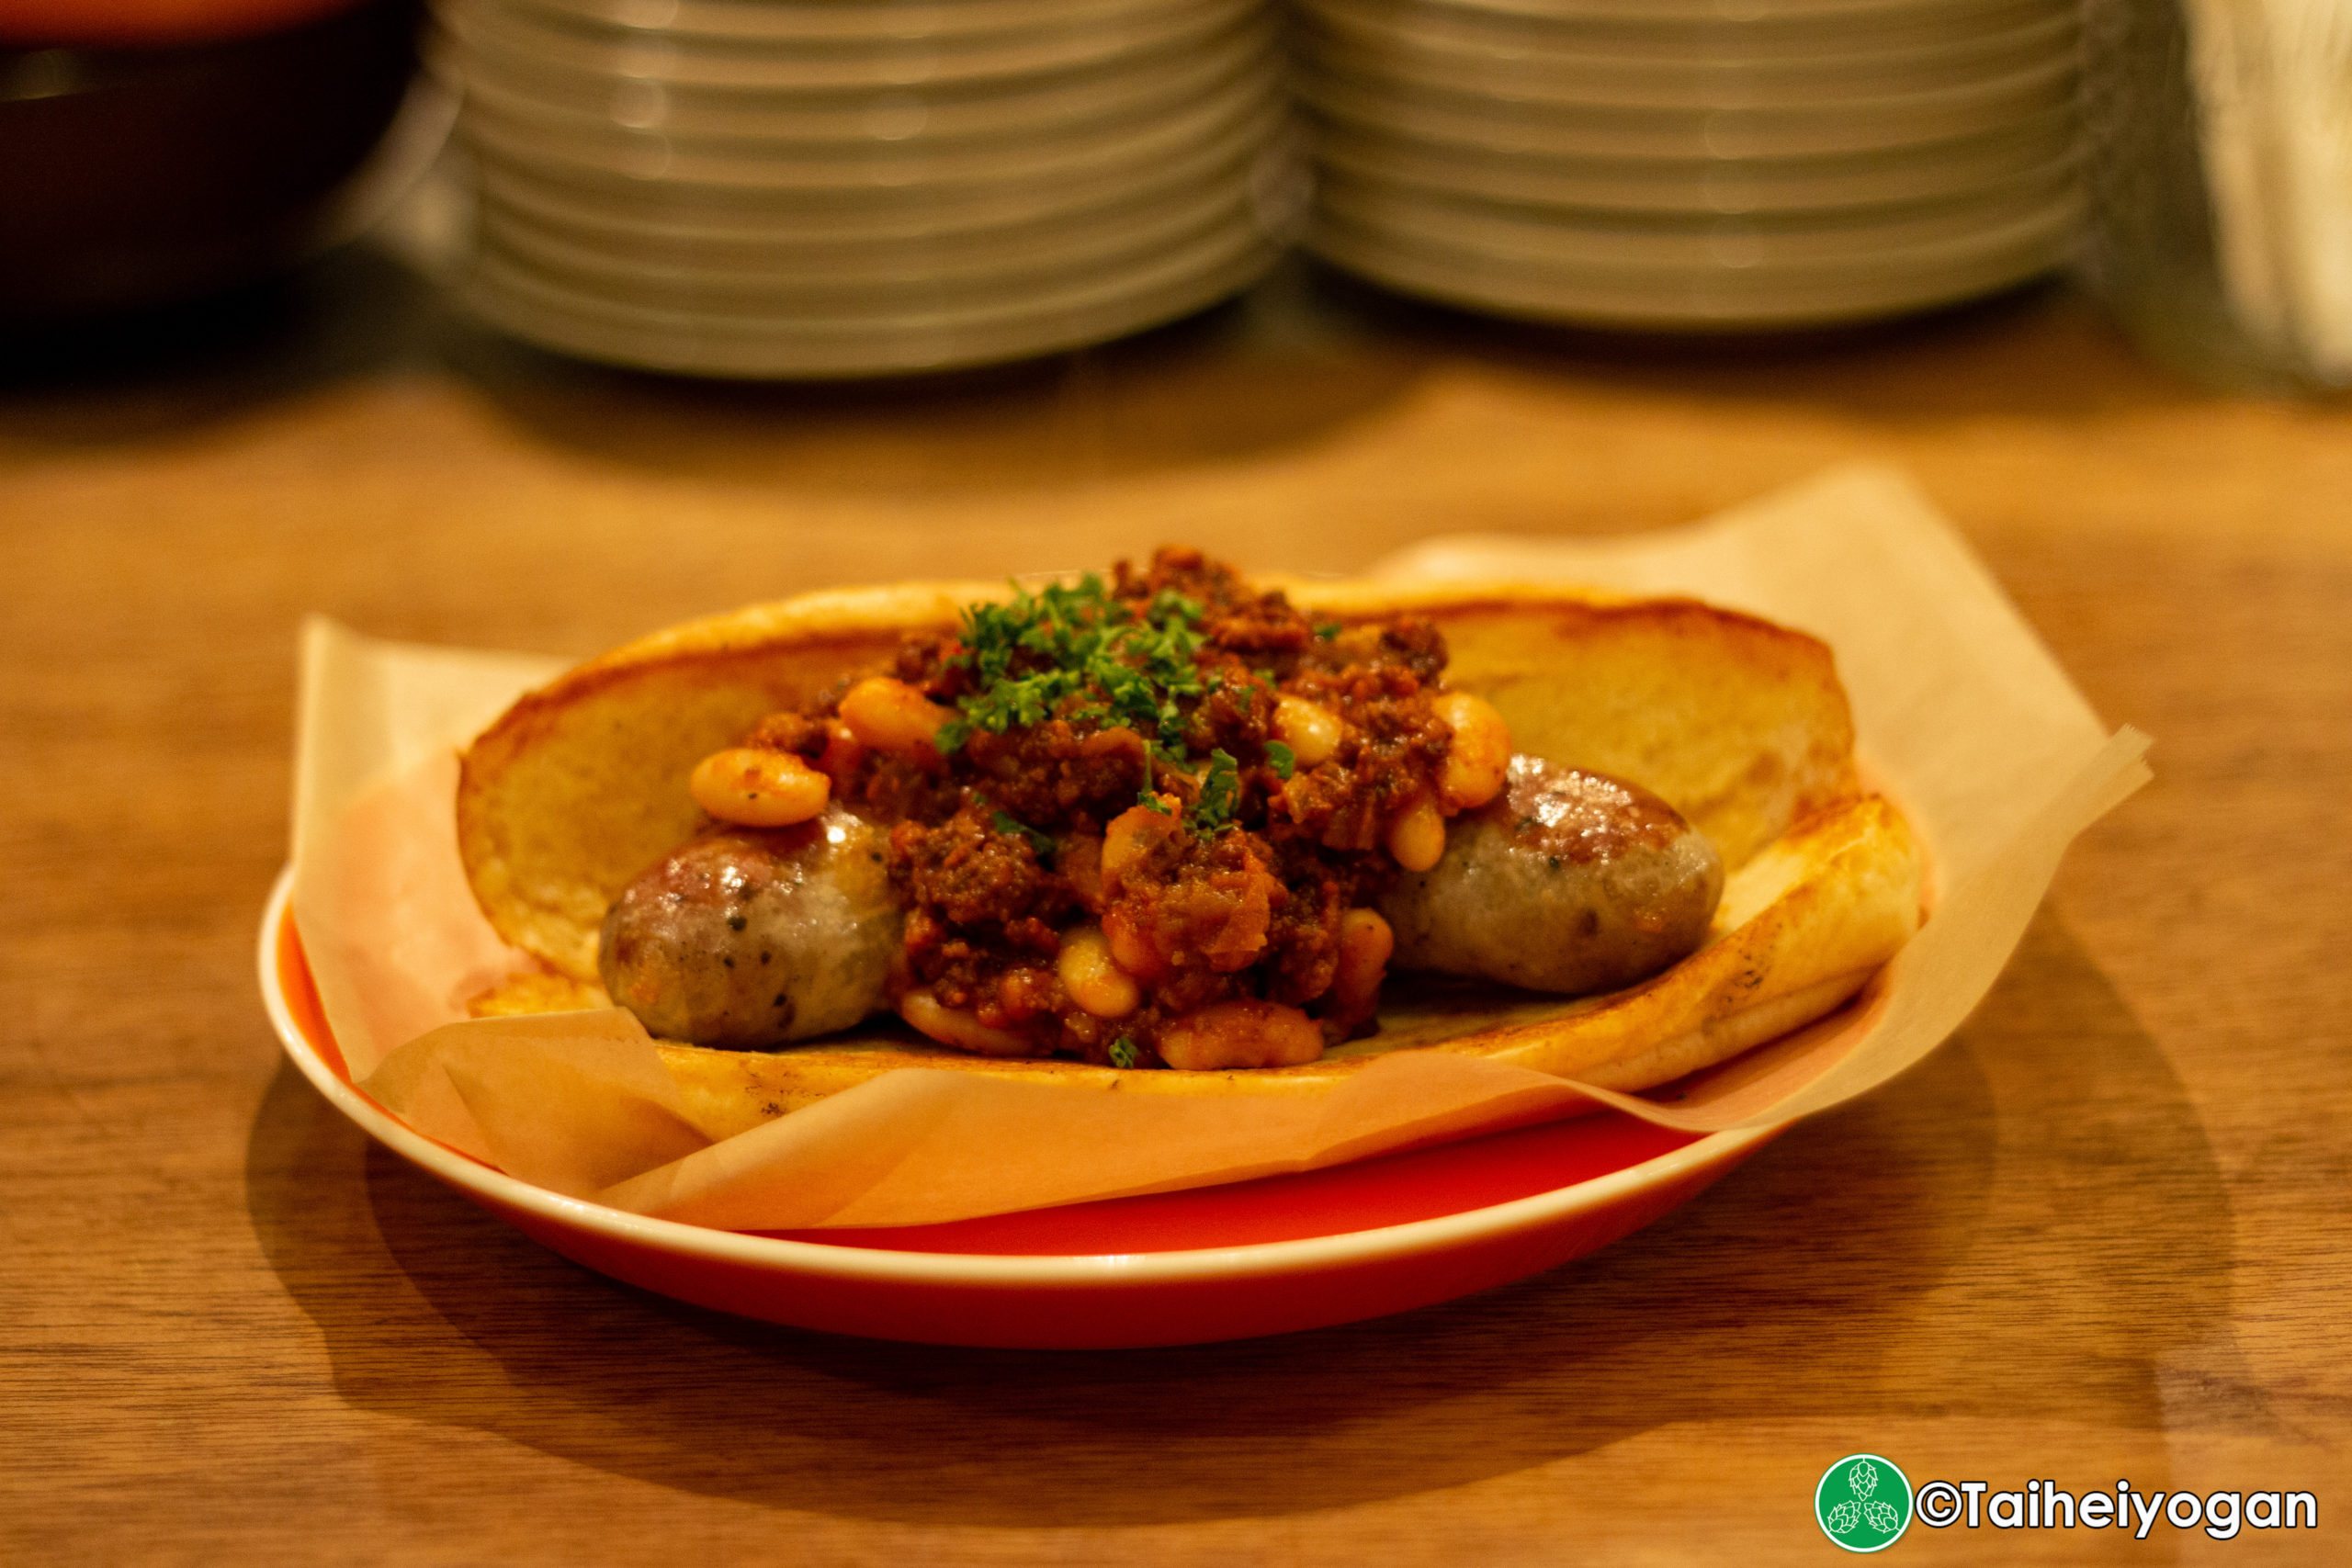 THE DAY east tokyo - Menu - Arabiki Hot Dog w/ Chili Beans